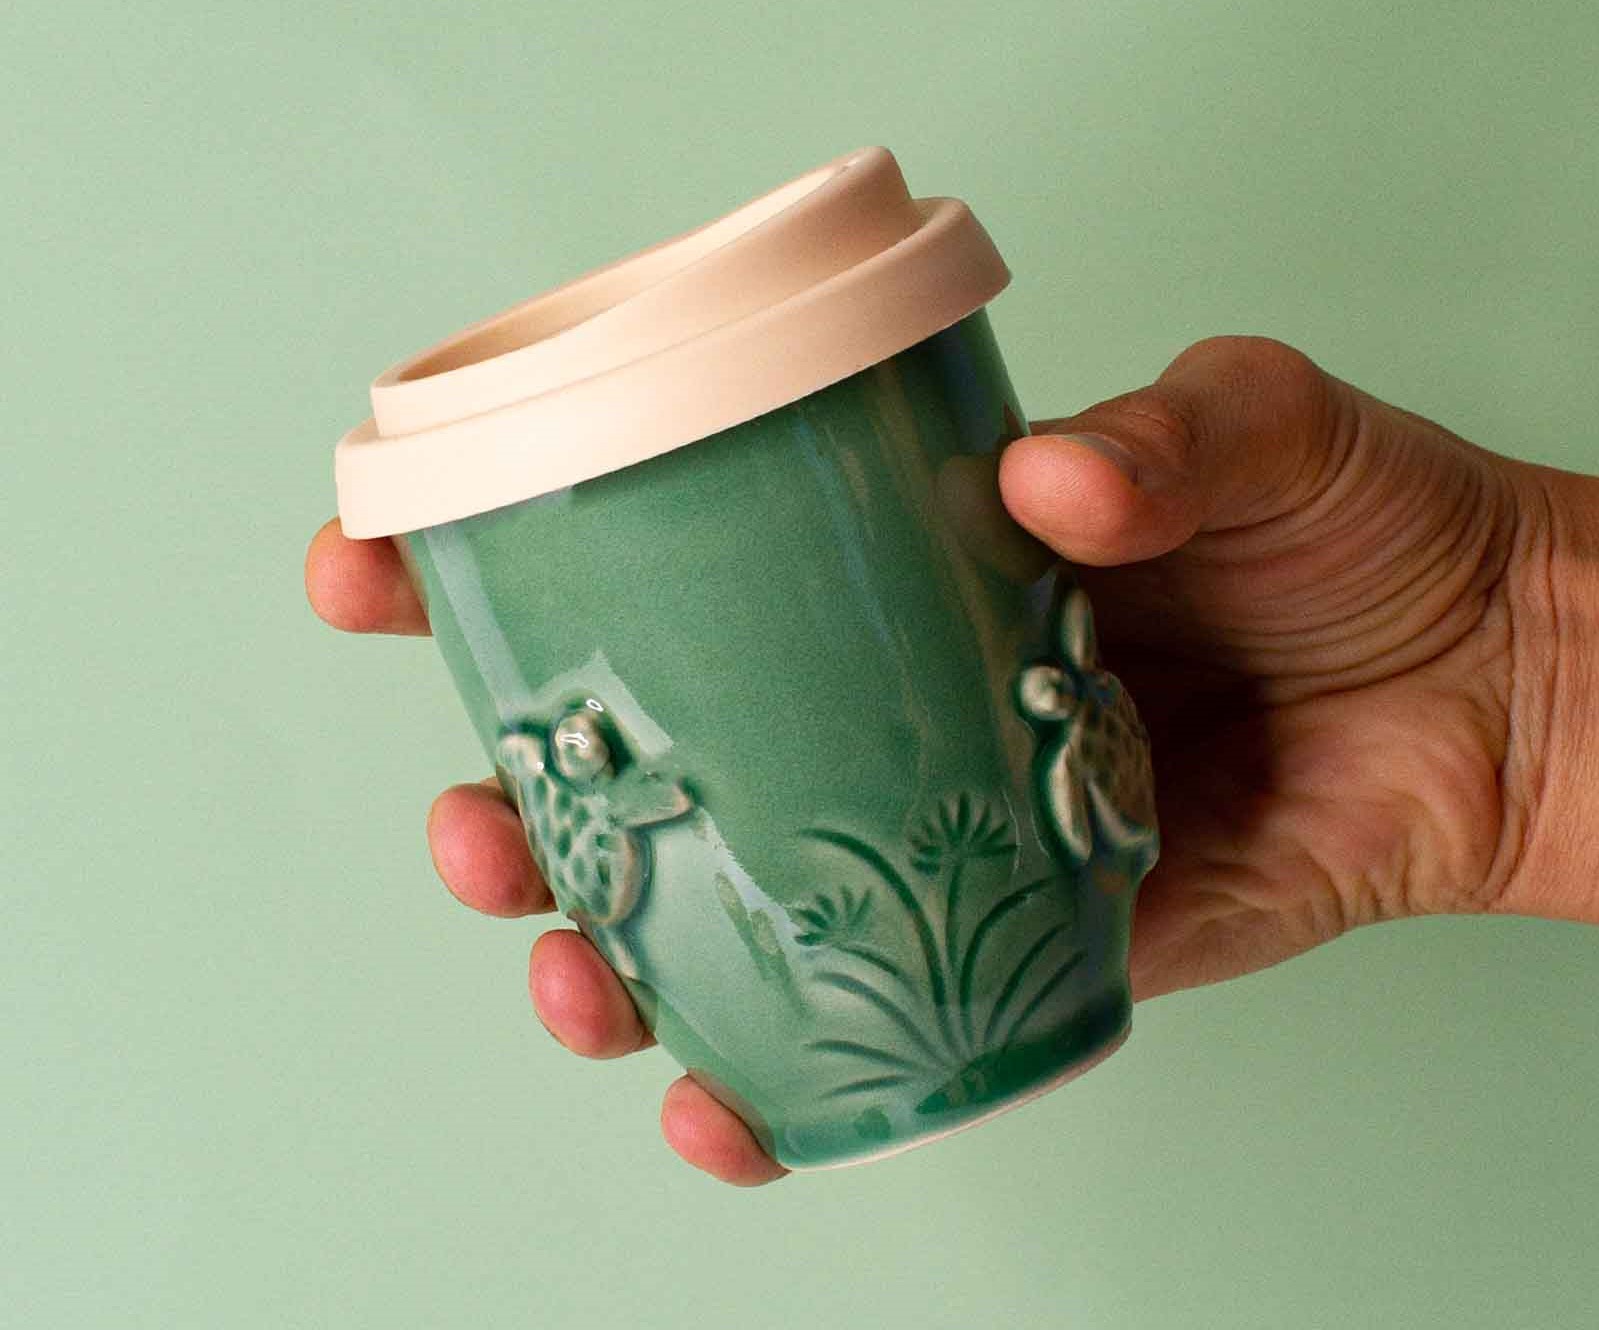 These gorgeous sustainable travel mugs won't leach harmful